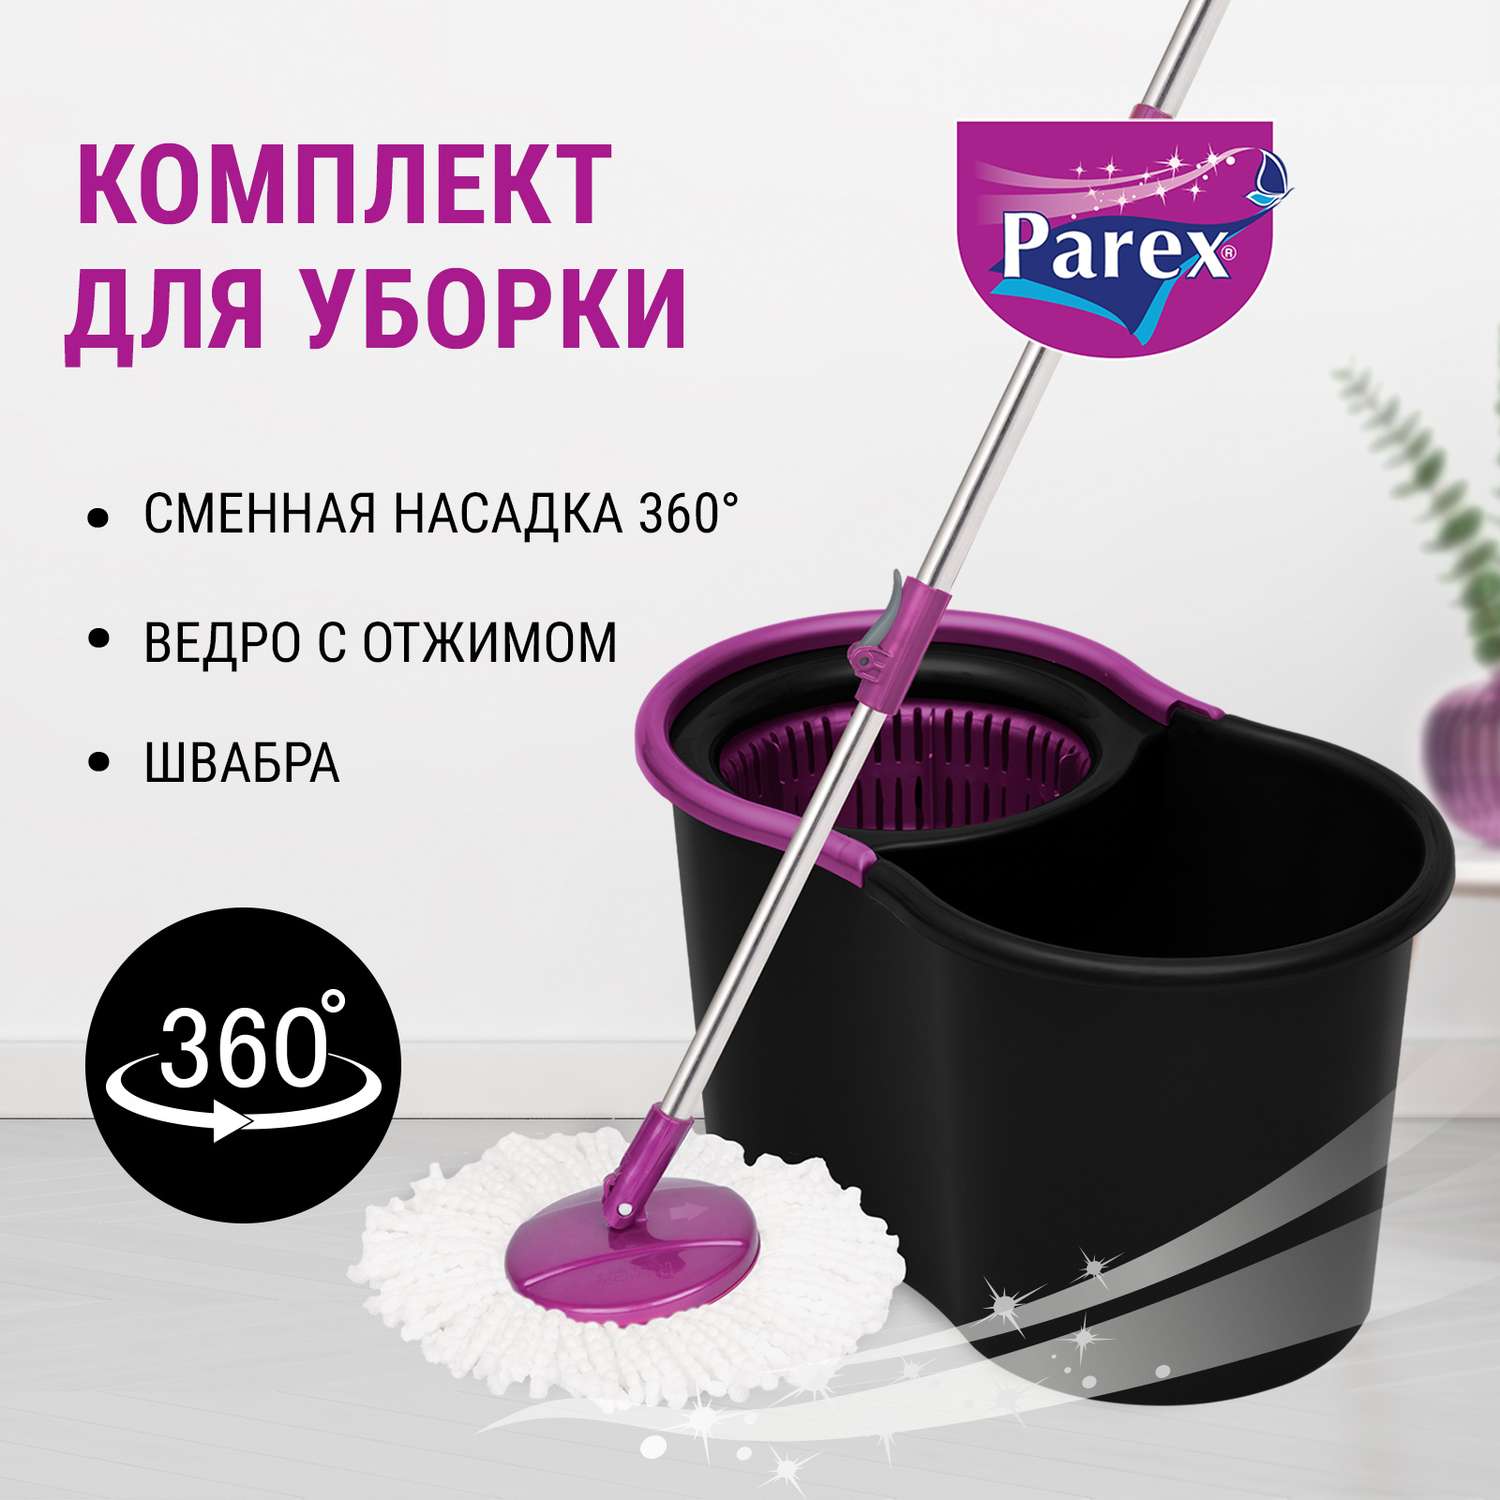 Комплект для уборки Parex с автоотжимом Black edition 360° 1 шт - фото 3